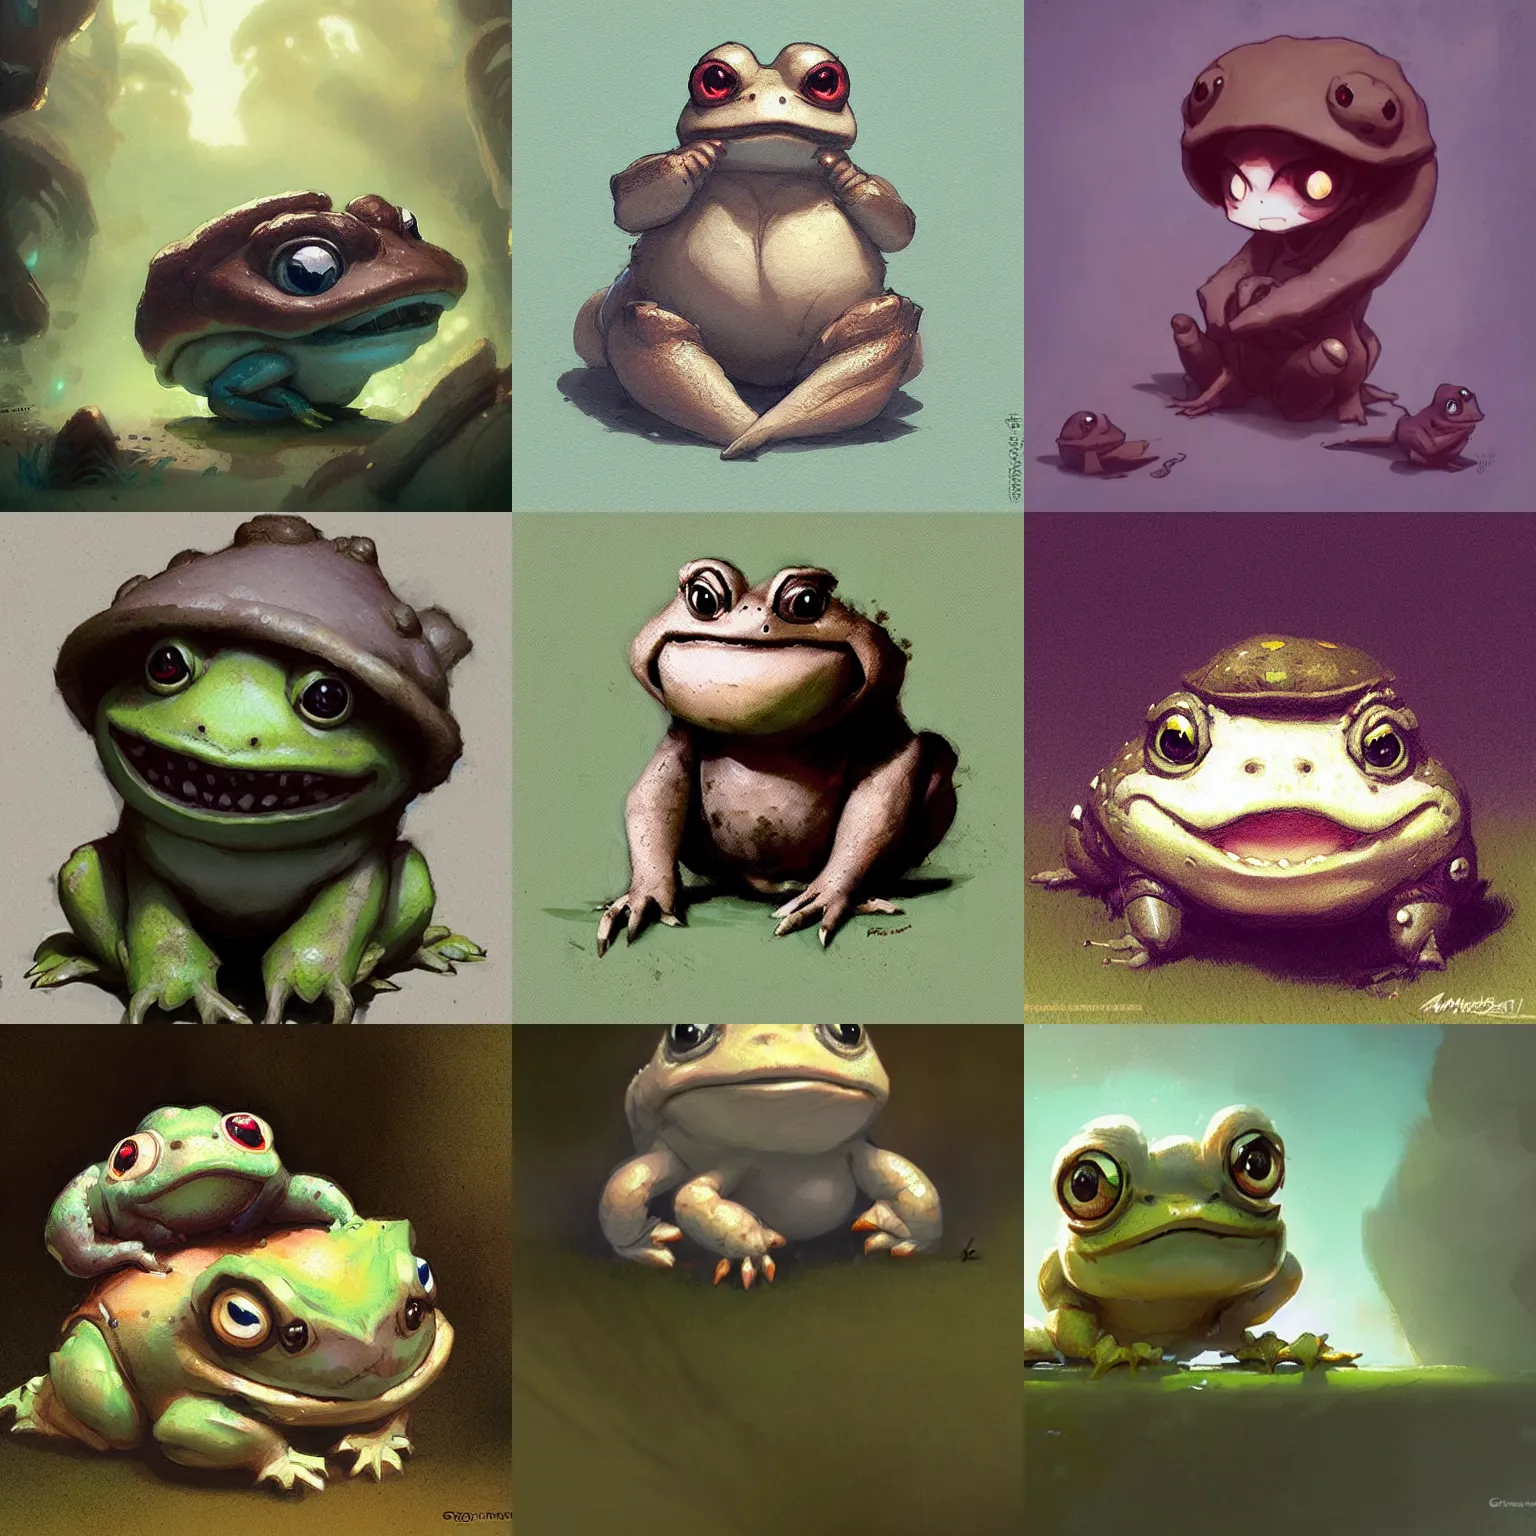 Prompt: cute anime antropomorphic chibi toad illustration by greg rutkowski